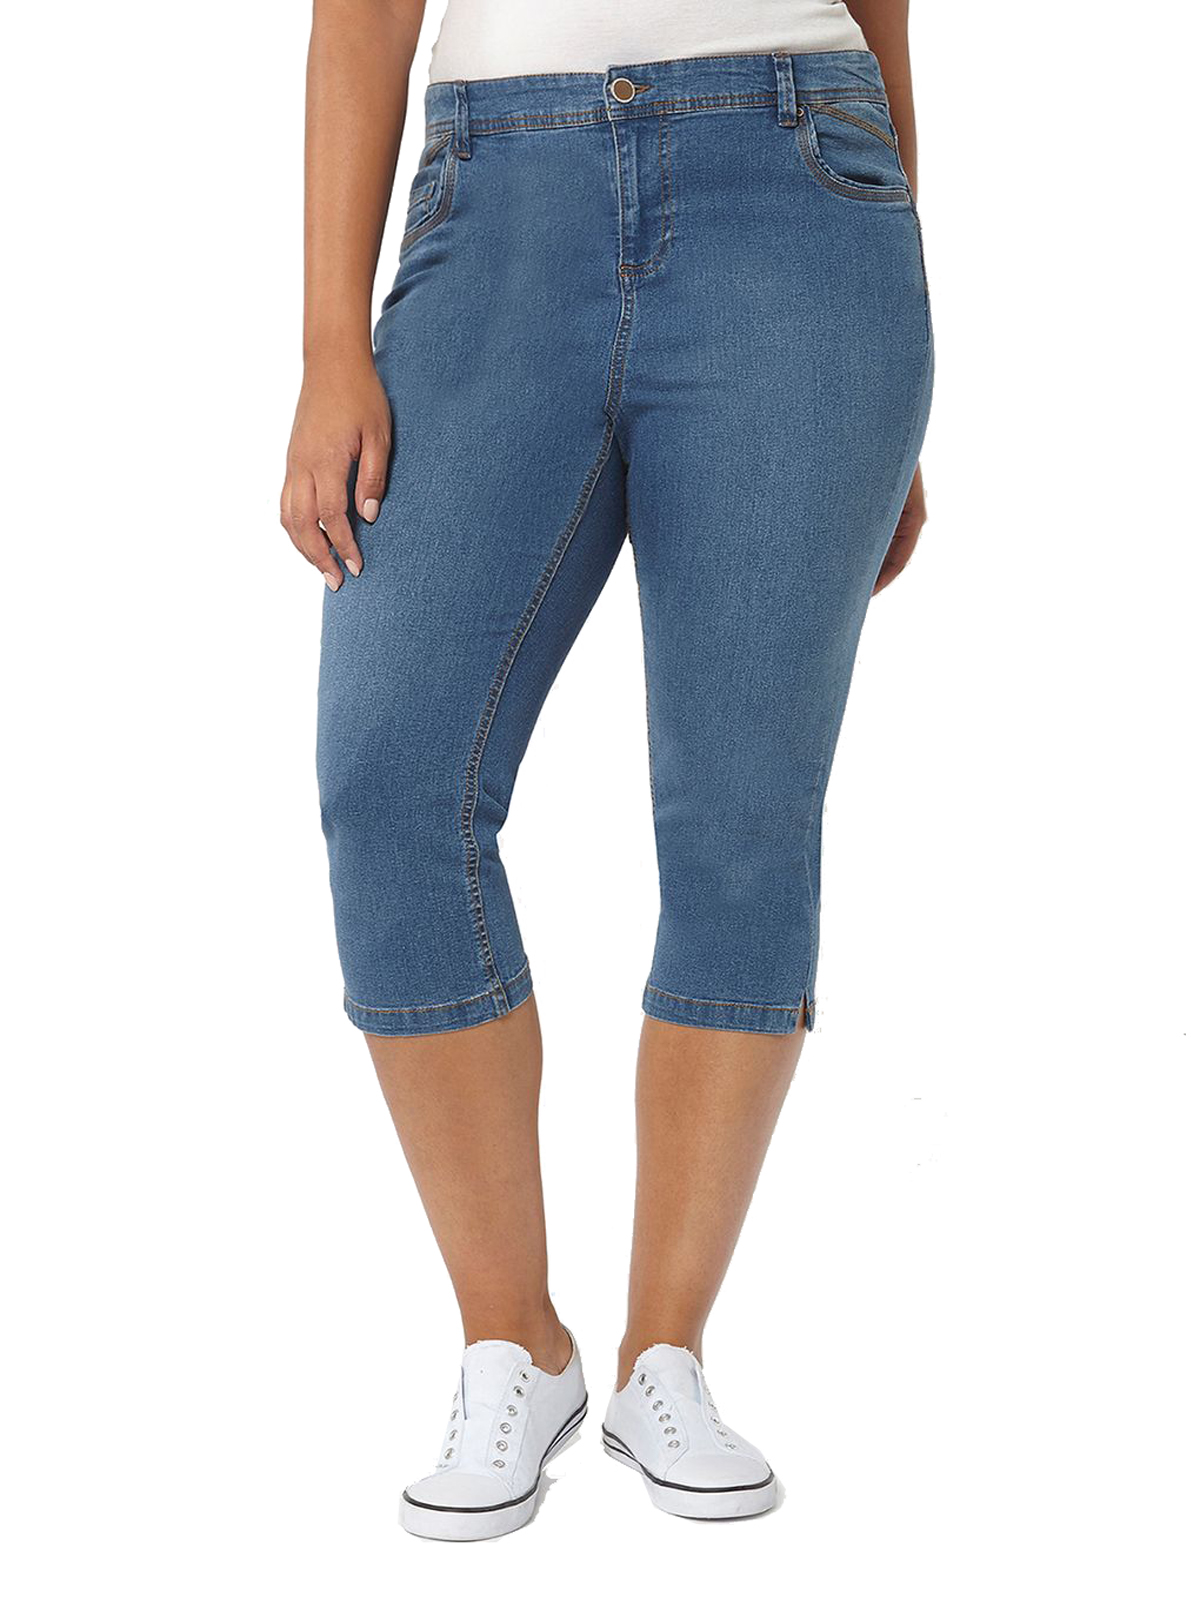 3vans DENIM Cropped Denim Jeans - Plus Size 14 to 32